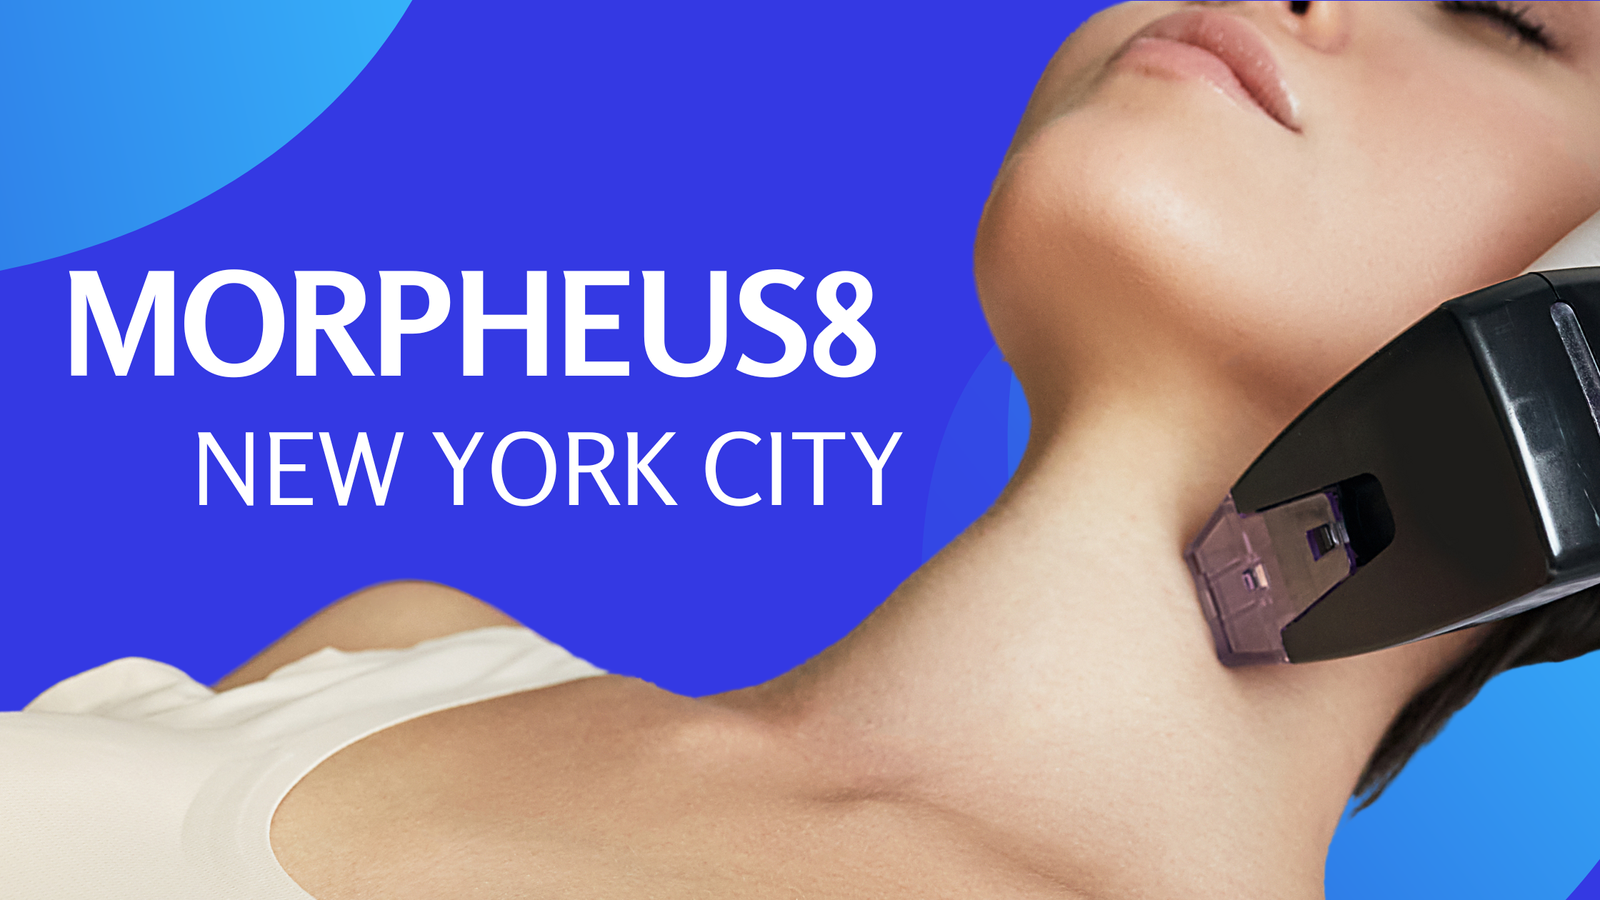 morpheus8 new york city